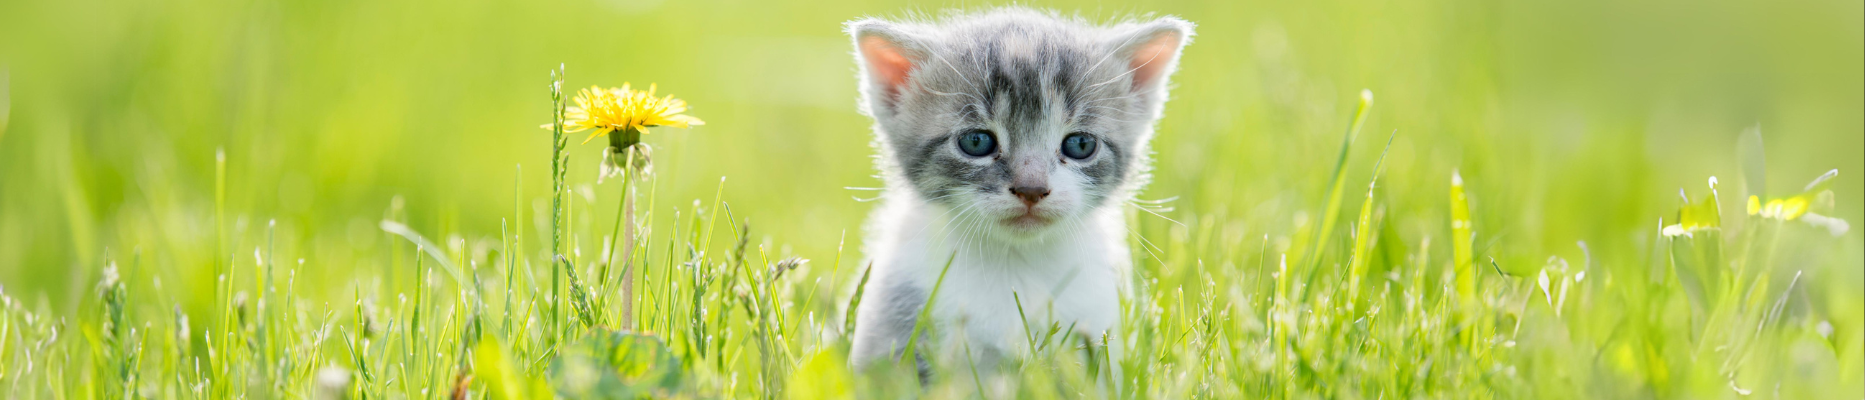 Kitten in Grass